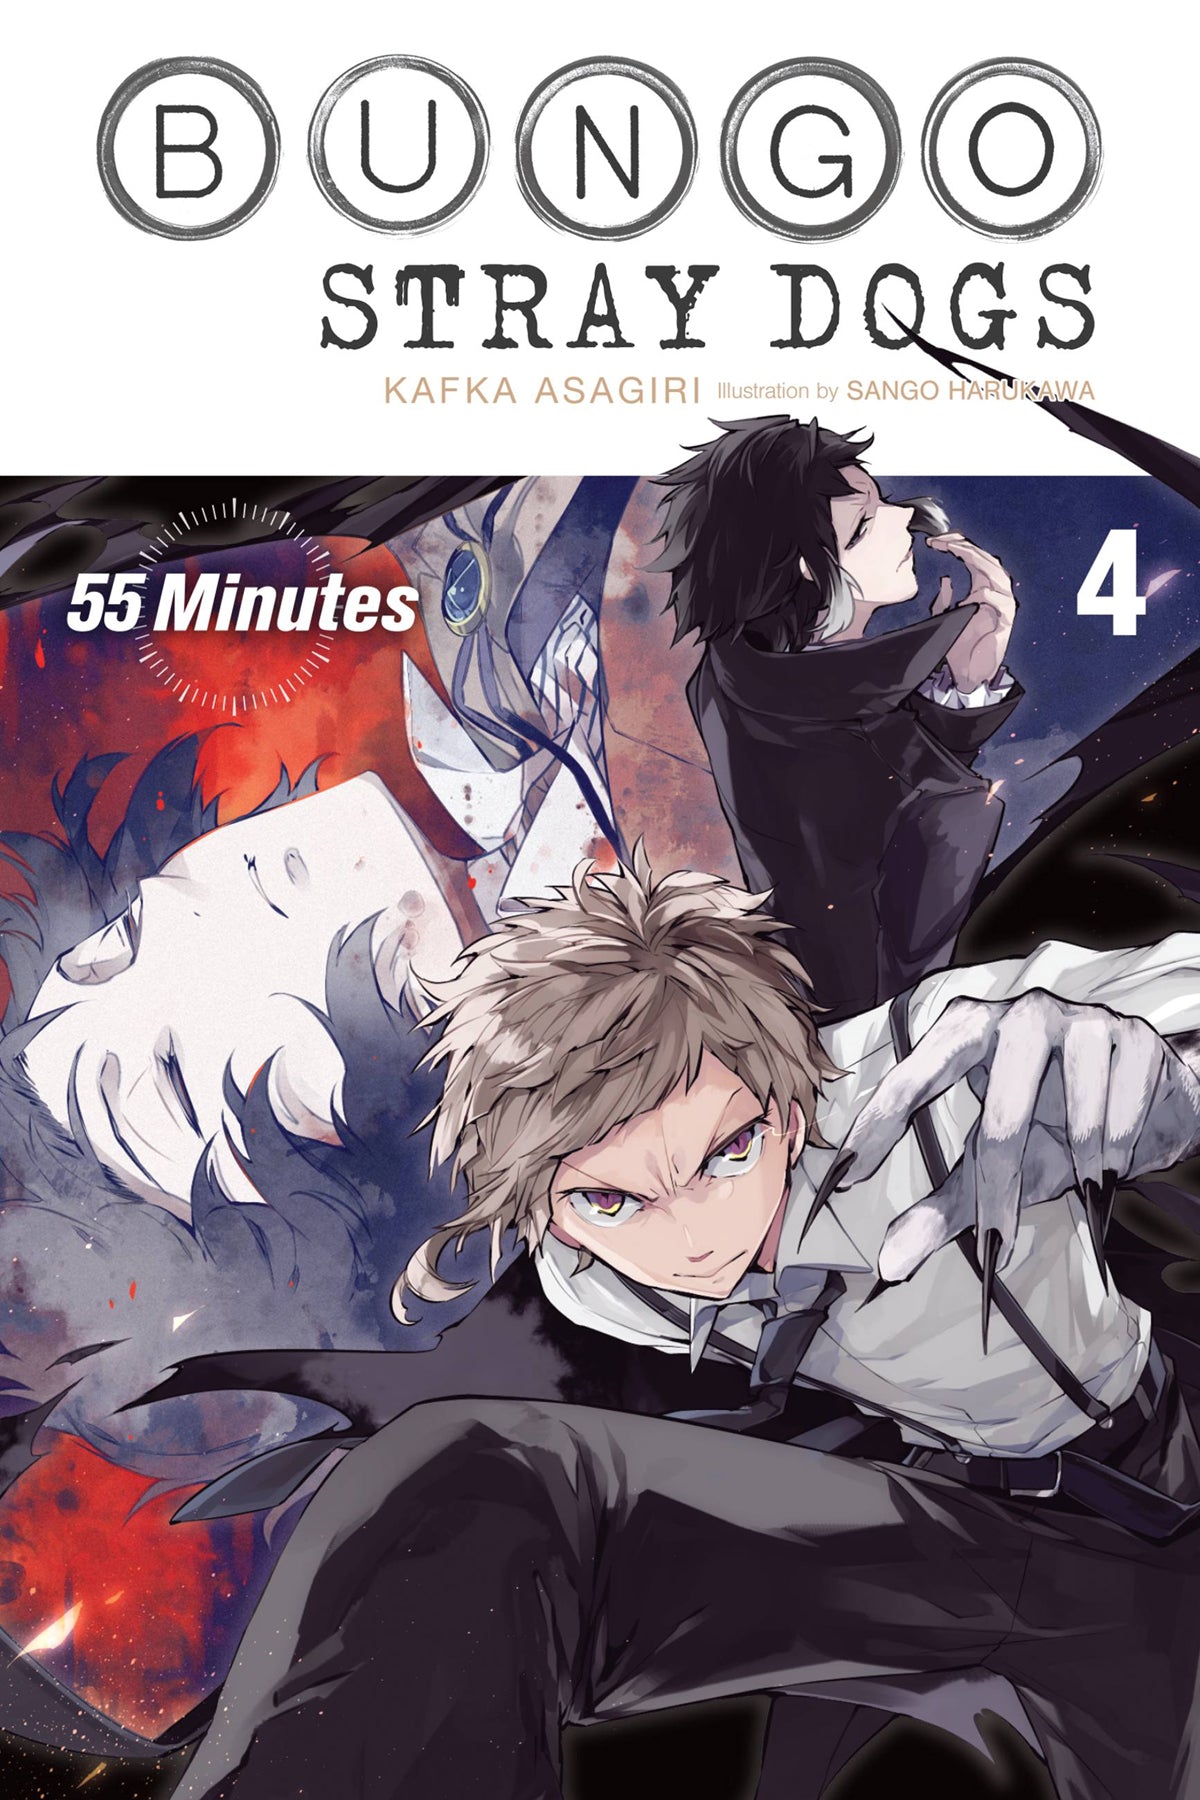 Bungo Stray Dogs Vol. 04 (Light Novel): 55 Minutes